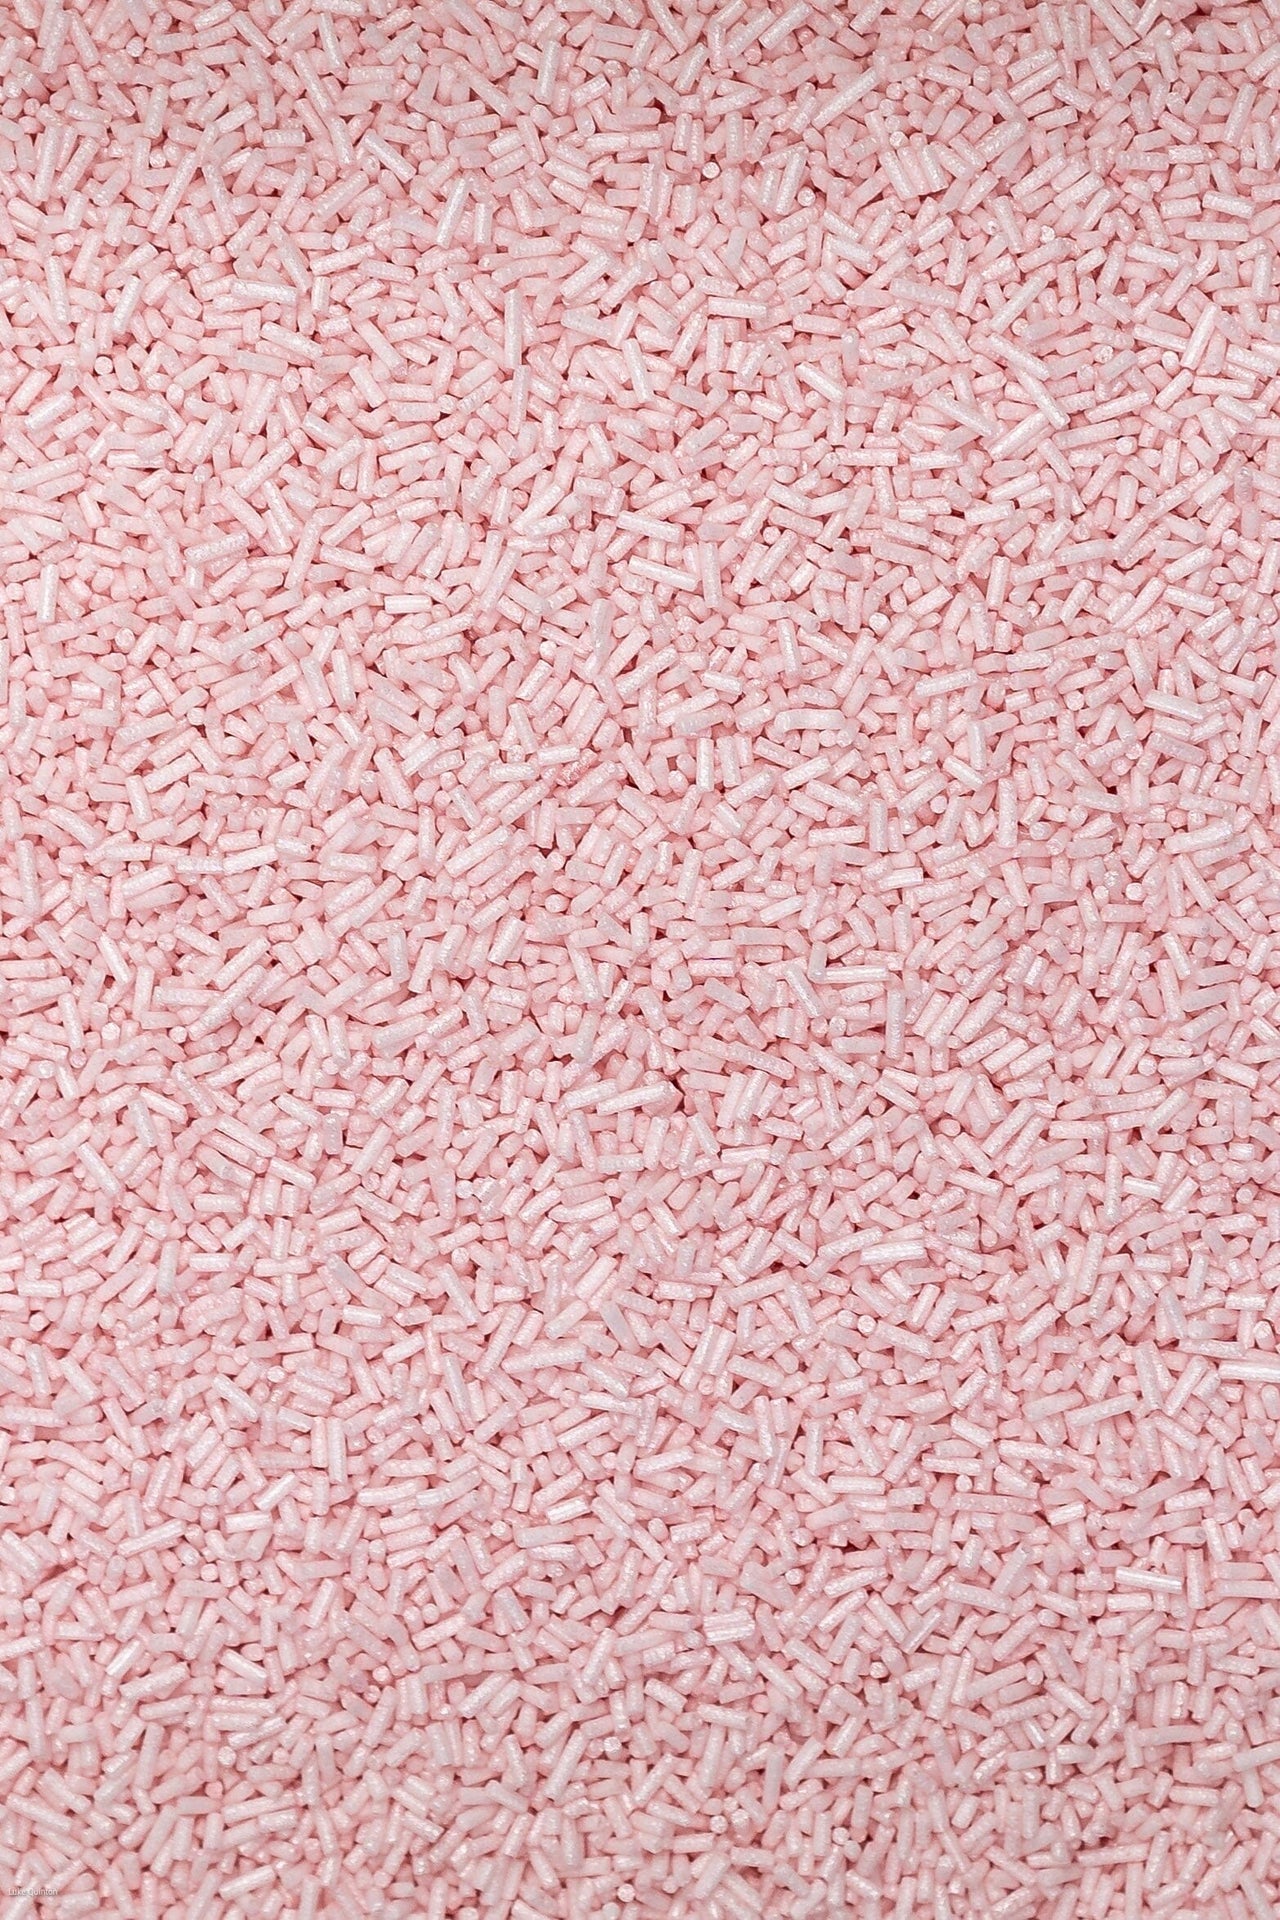 Glimmer Strands - Pastel Pink (No E171) Sprinkles SPRINKLY